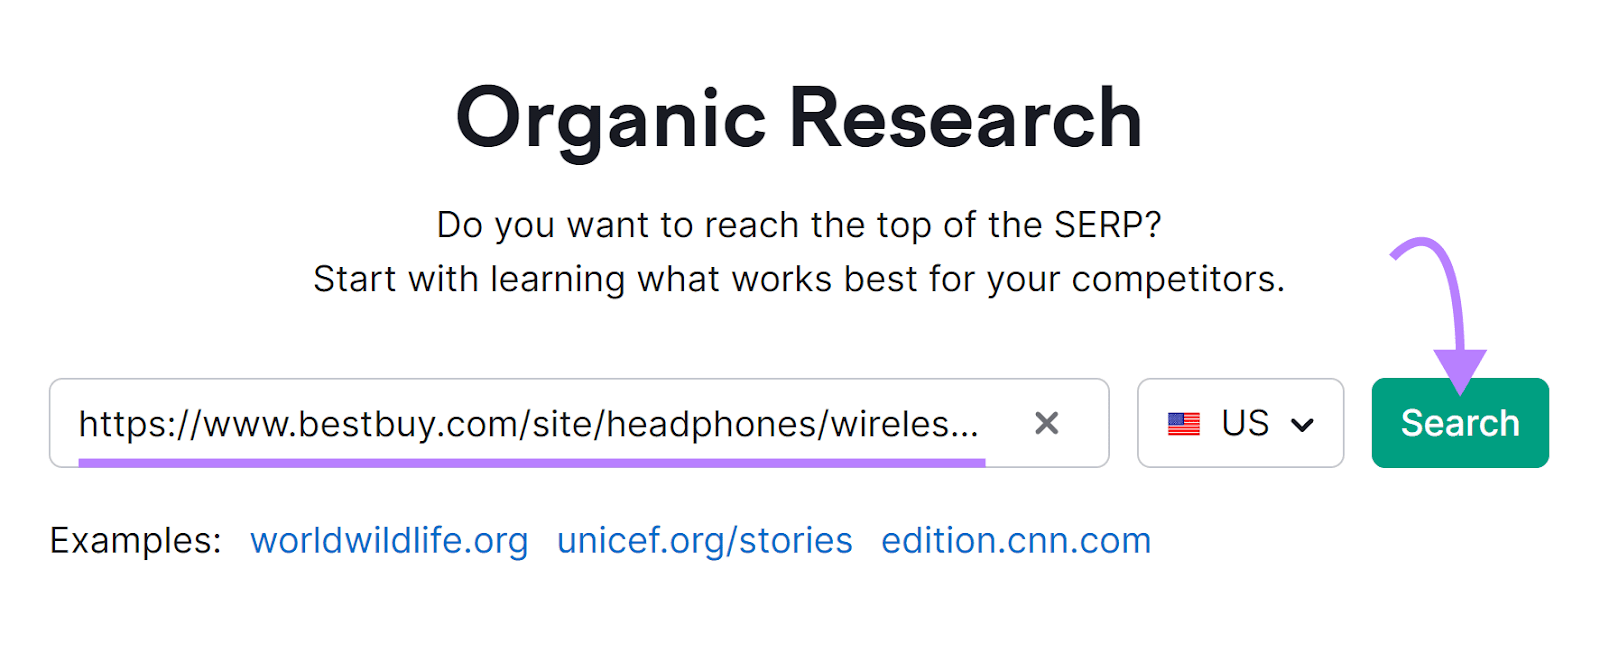 Organic Research tool search bar